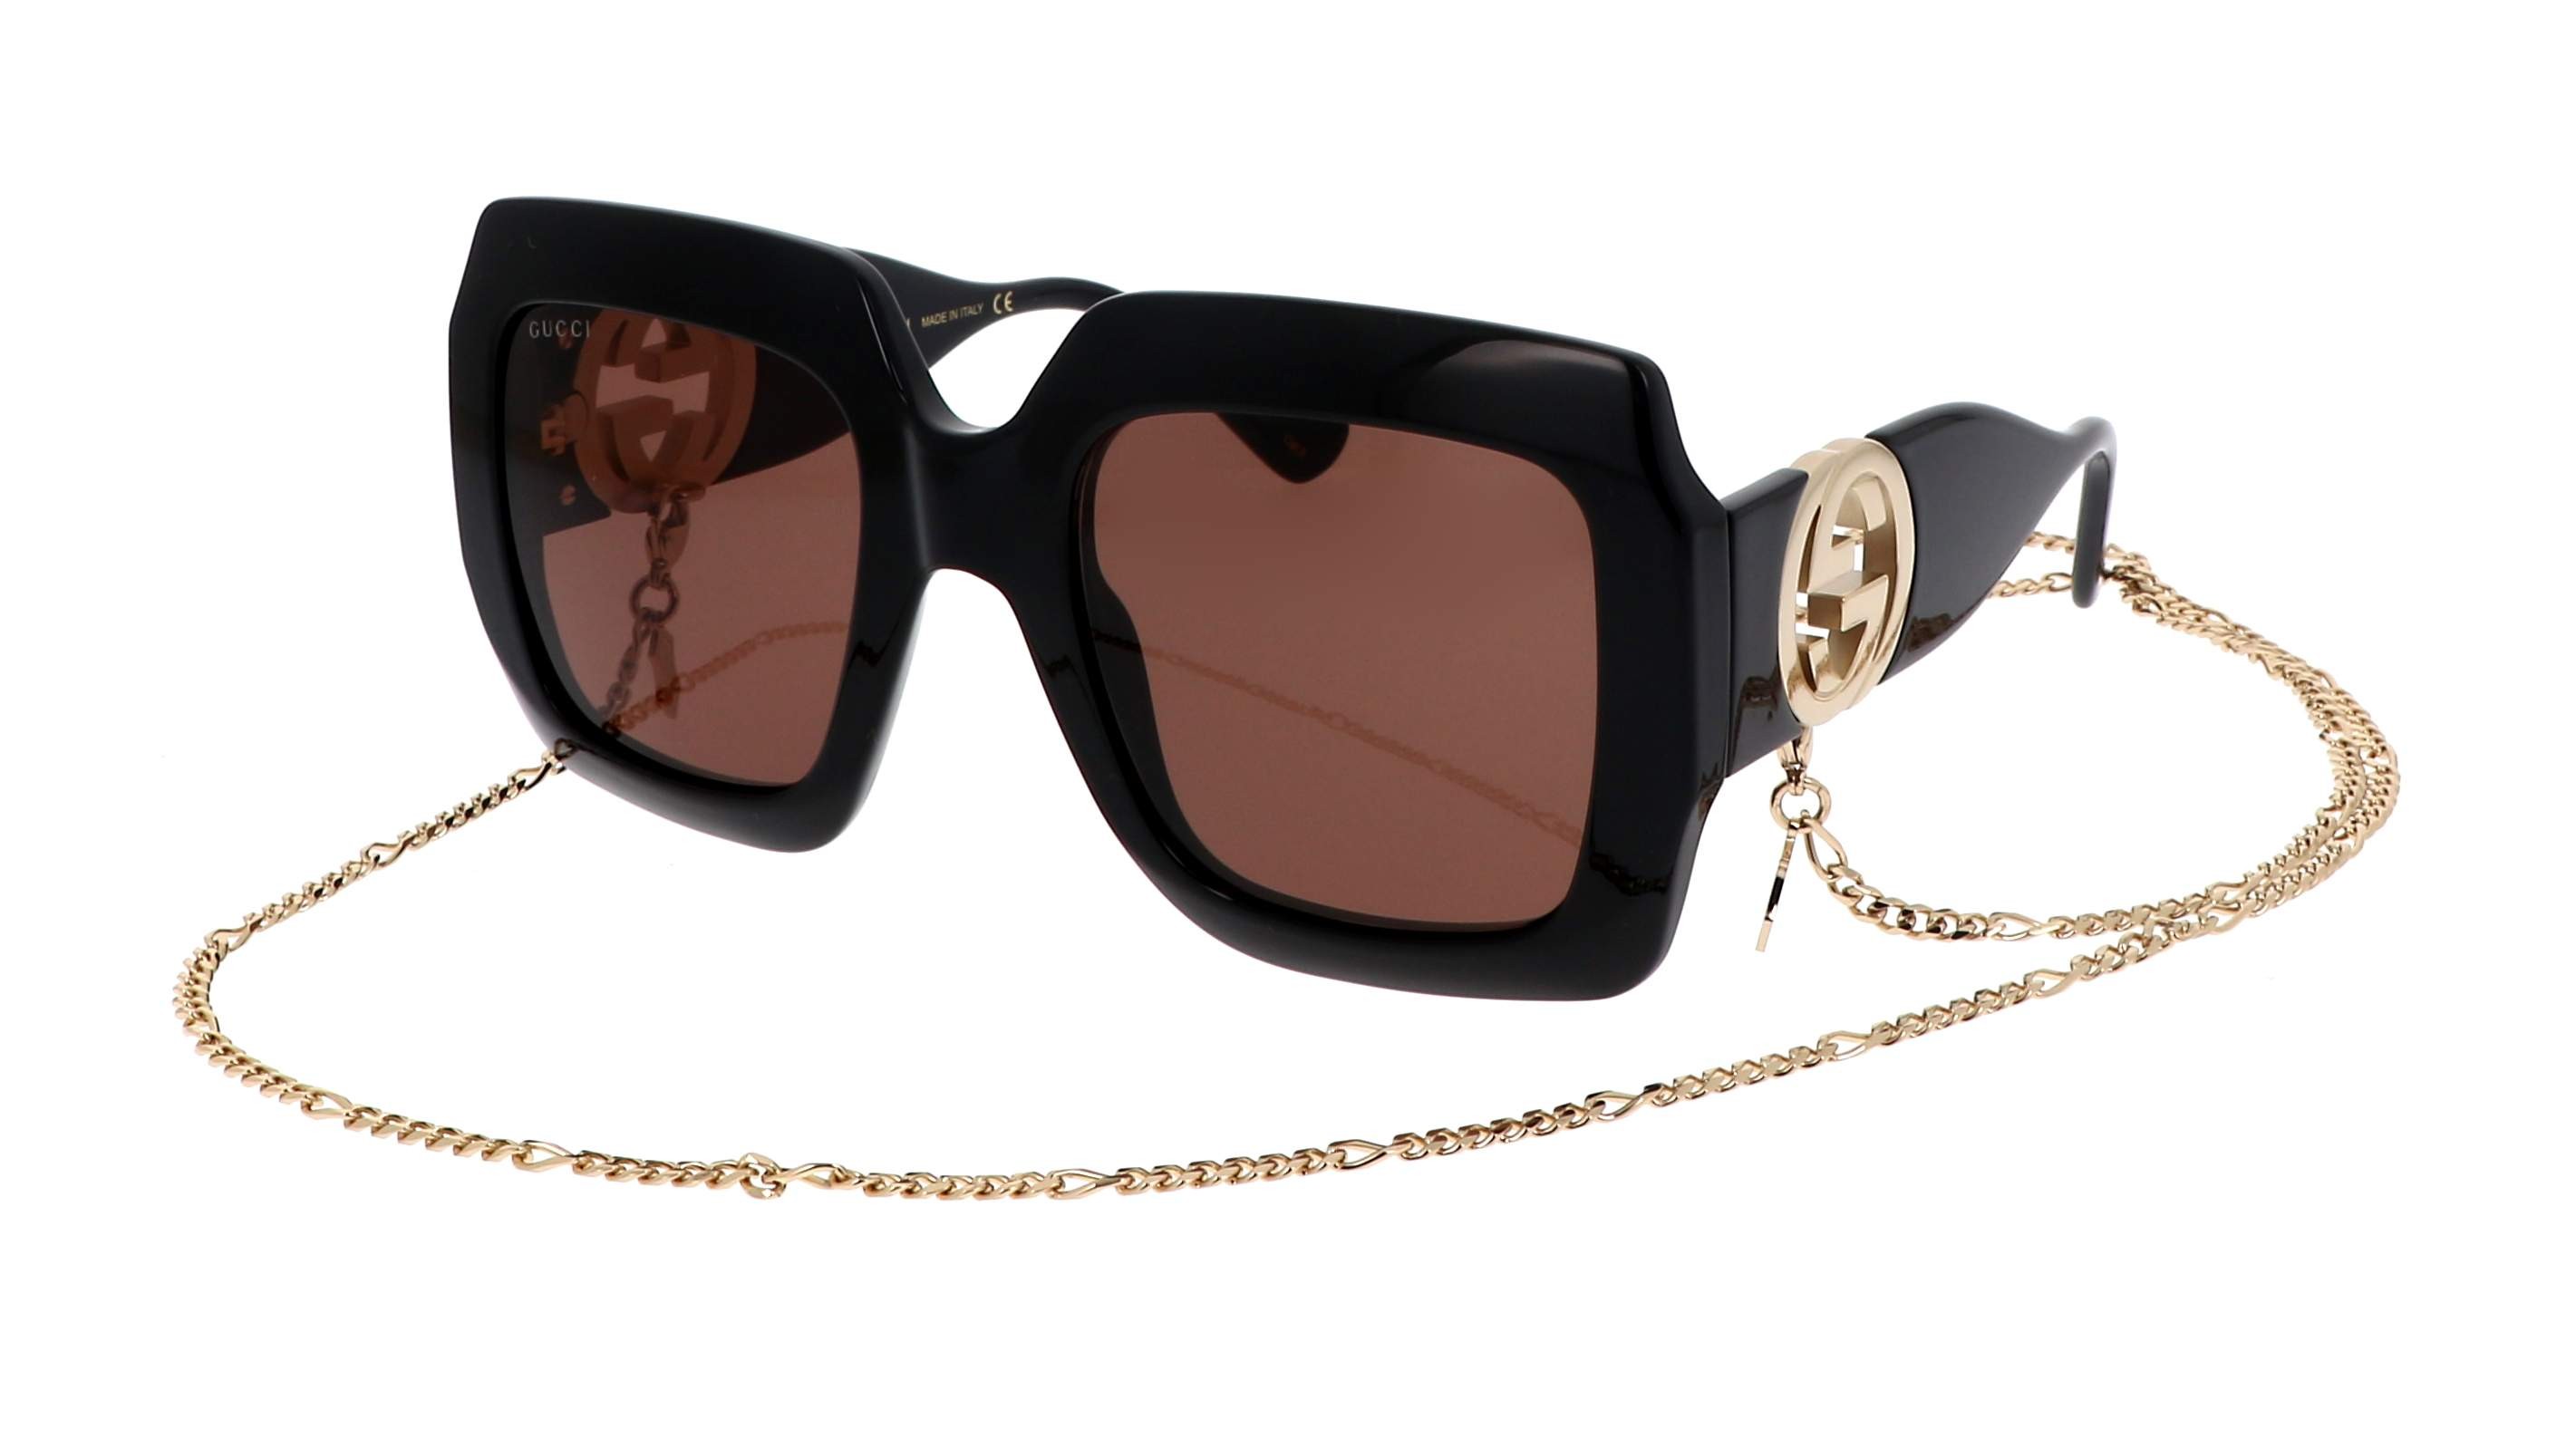 Gucci 1022 005 - Oculos de Sol com Corrente